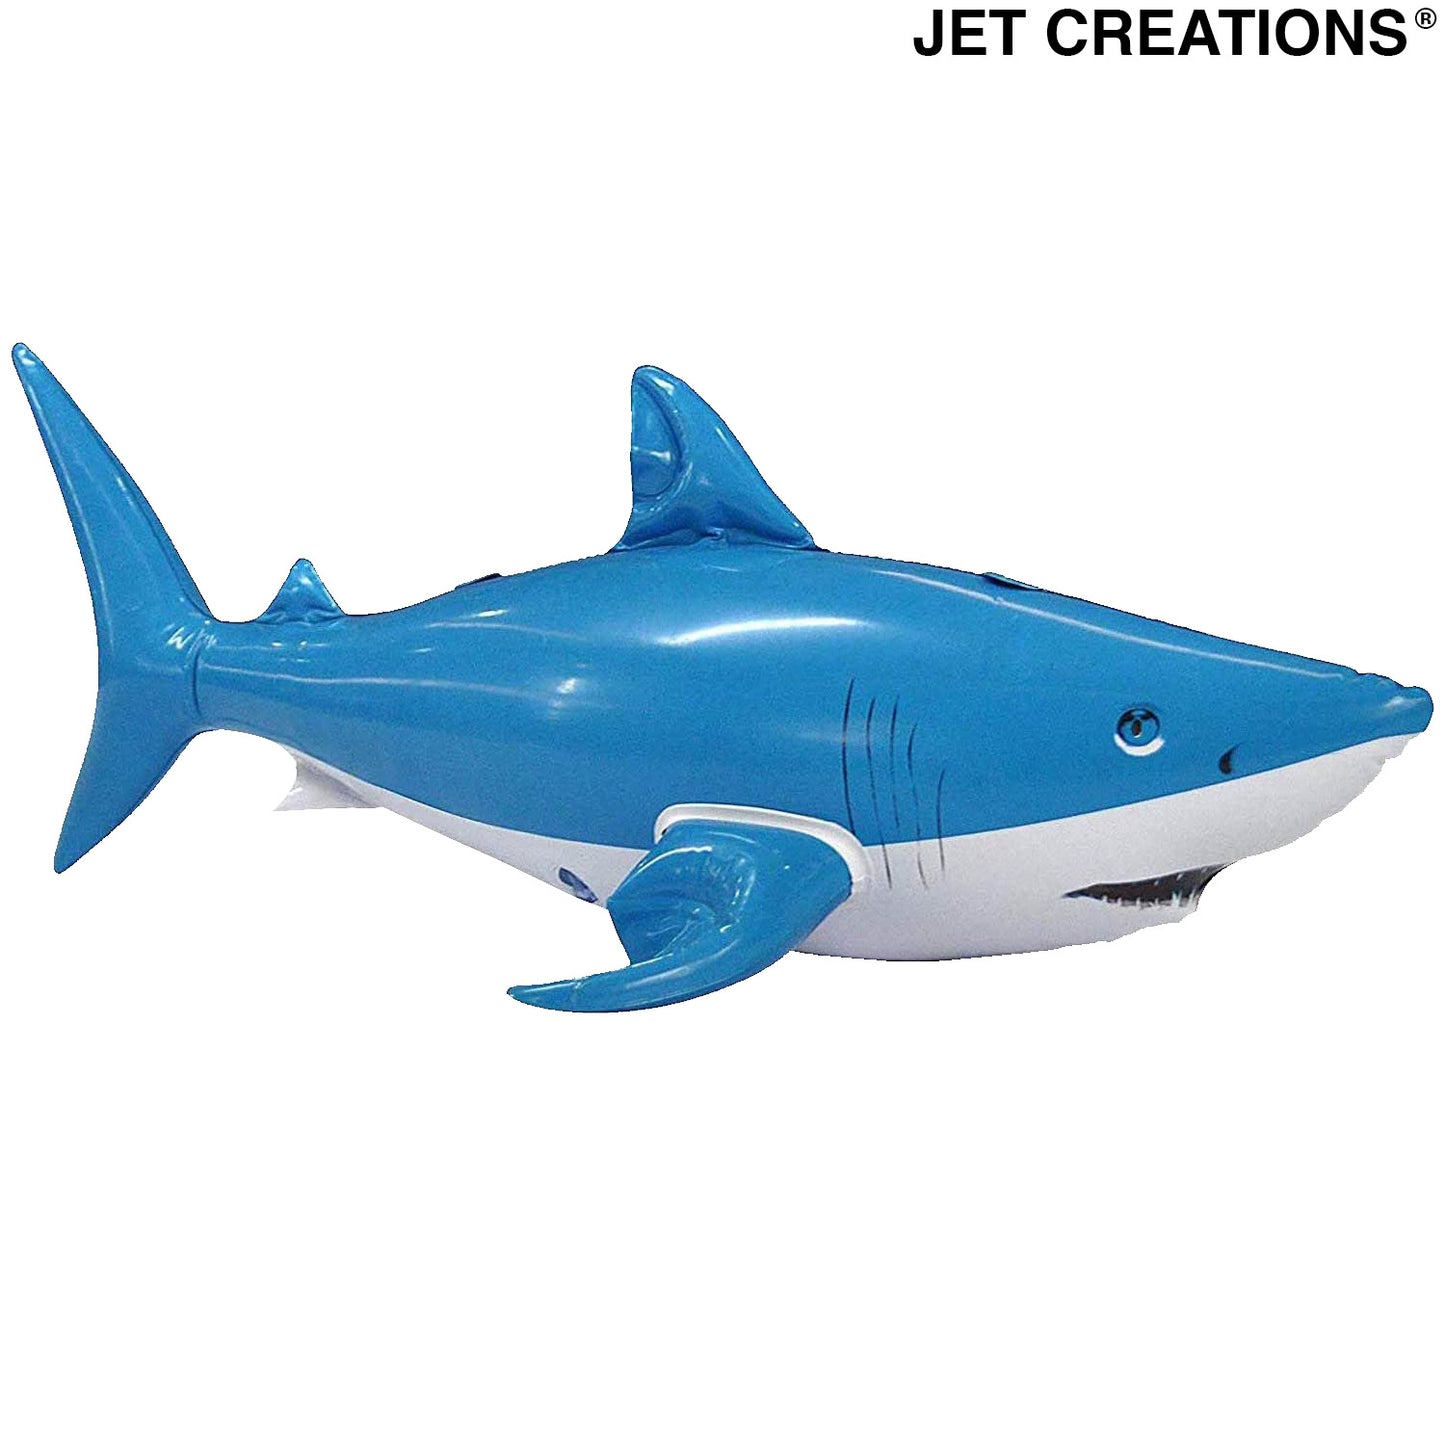 AN-SHARKY4 24inch Sharky - Right